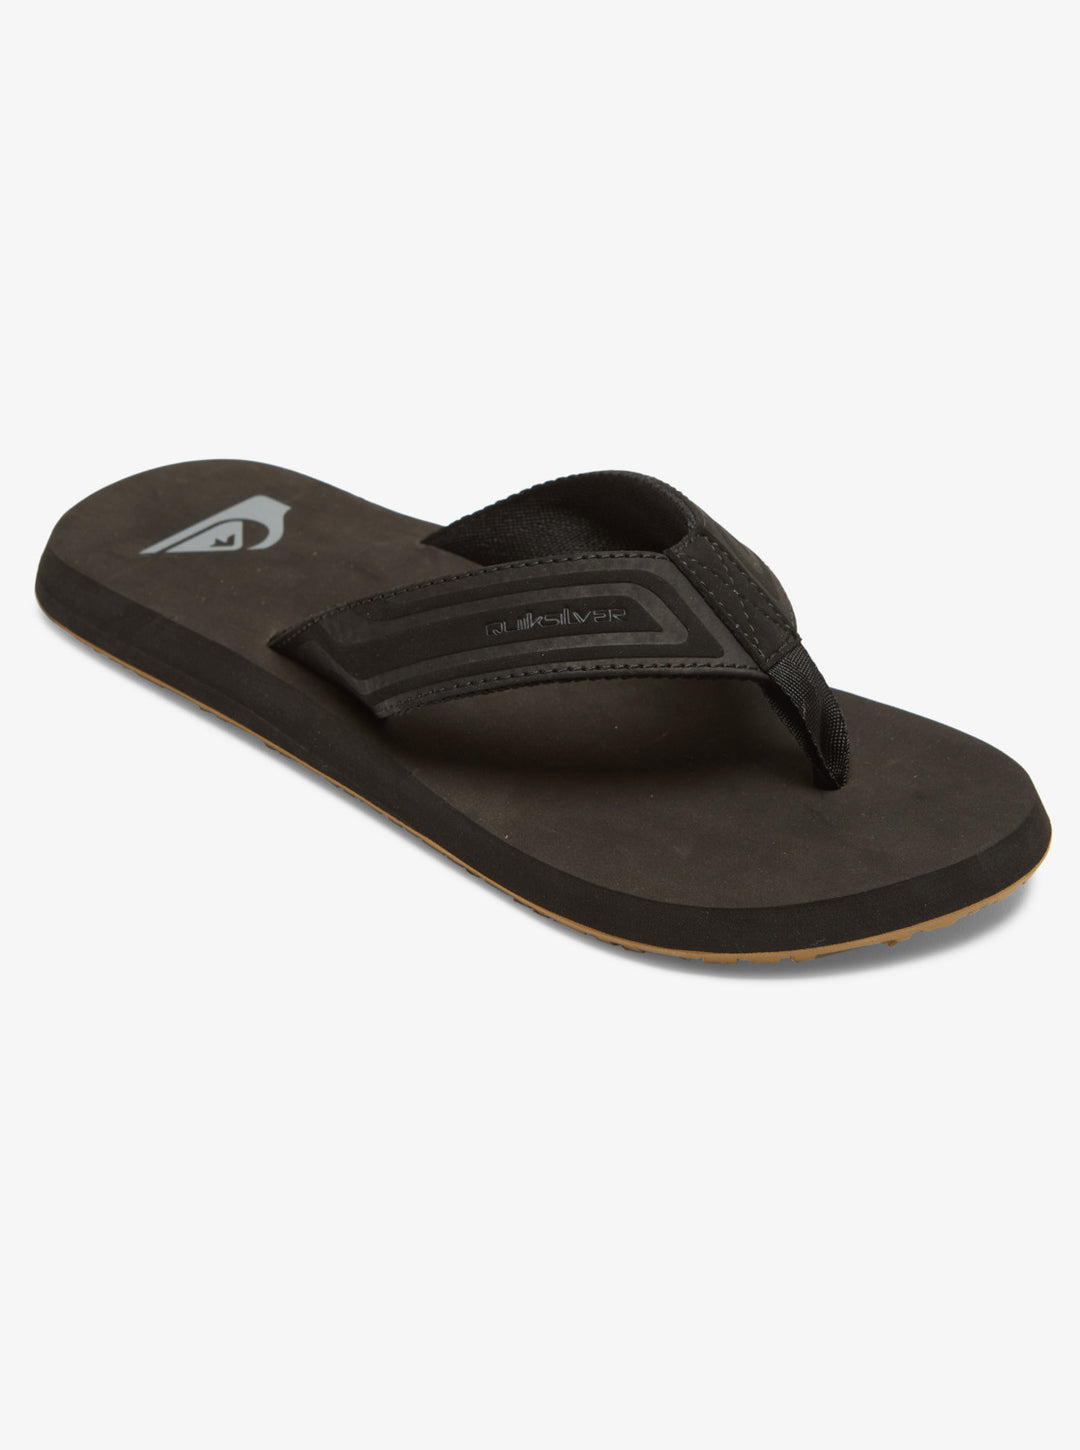 Quiksilver Monkey Wrench Core Slide Sandals - Black - Sun Diego Boardshop